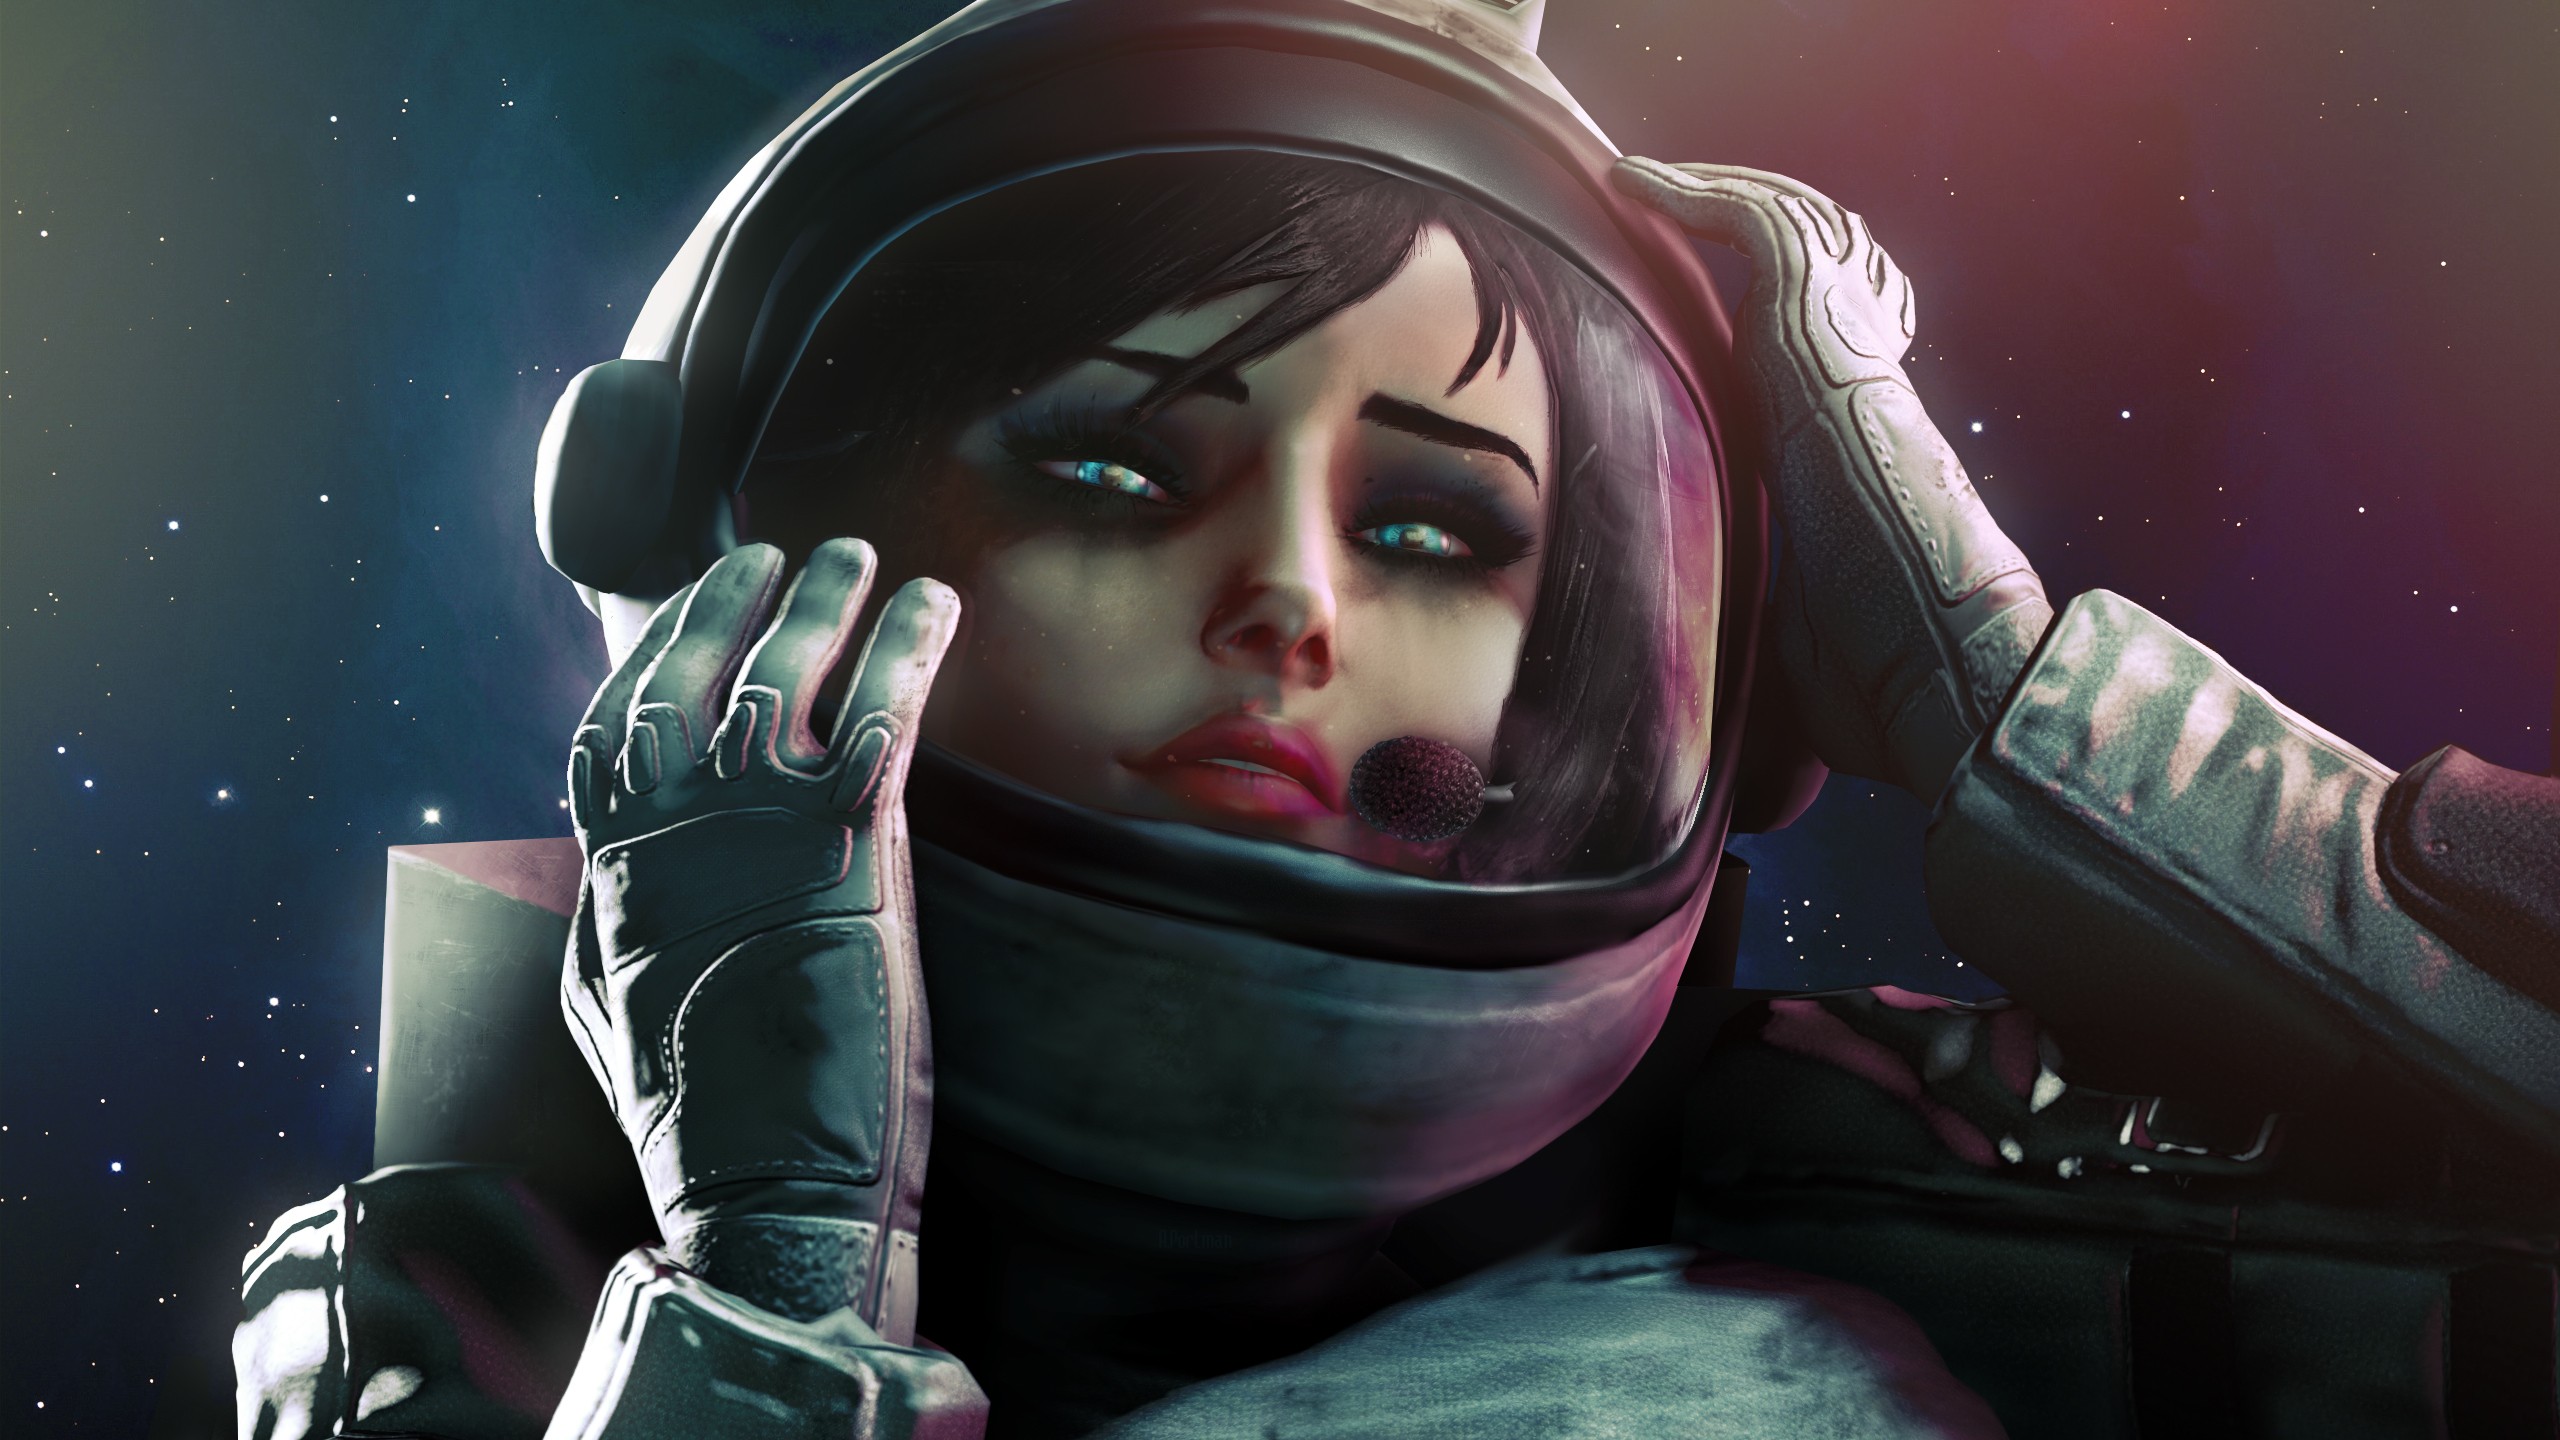 Astronaut Artwork Elizabeth BioShock BioShock The Astronauts BioShock Infinite 2560x1440